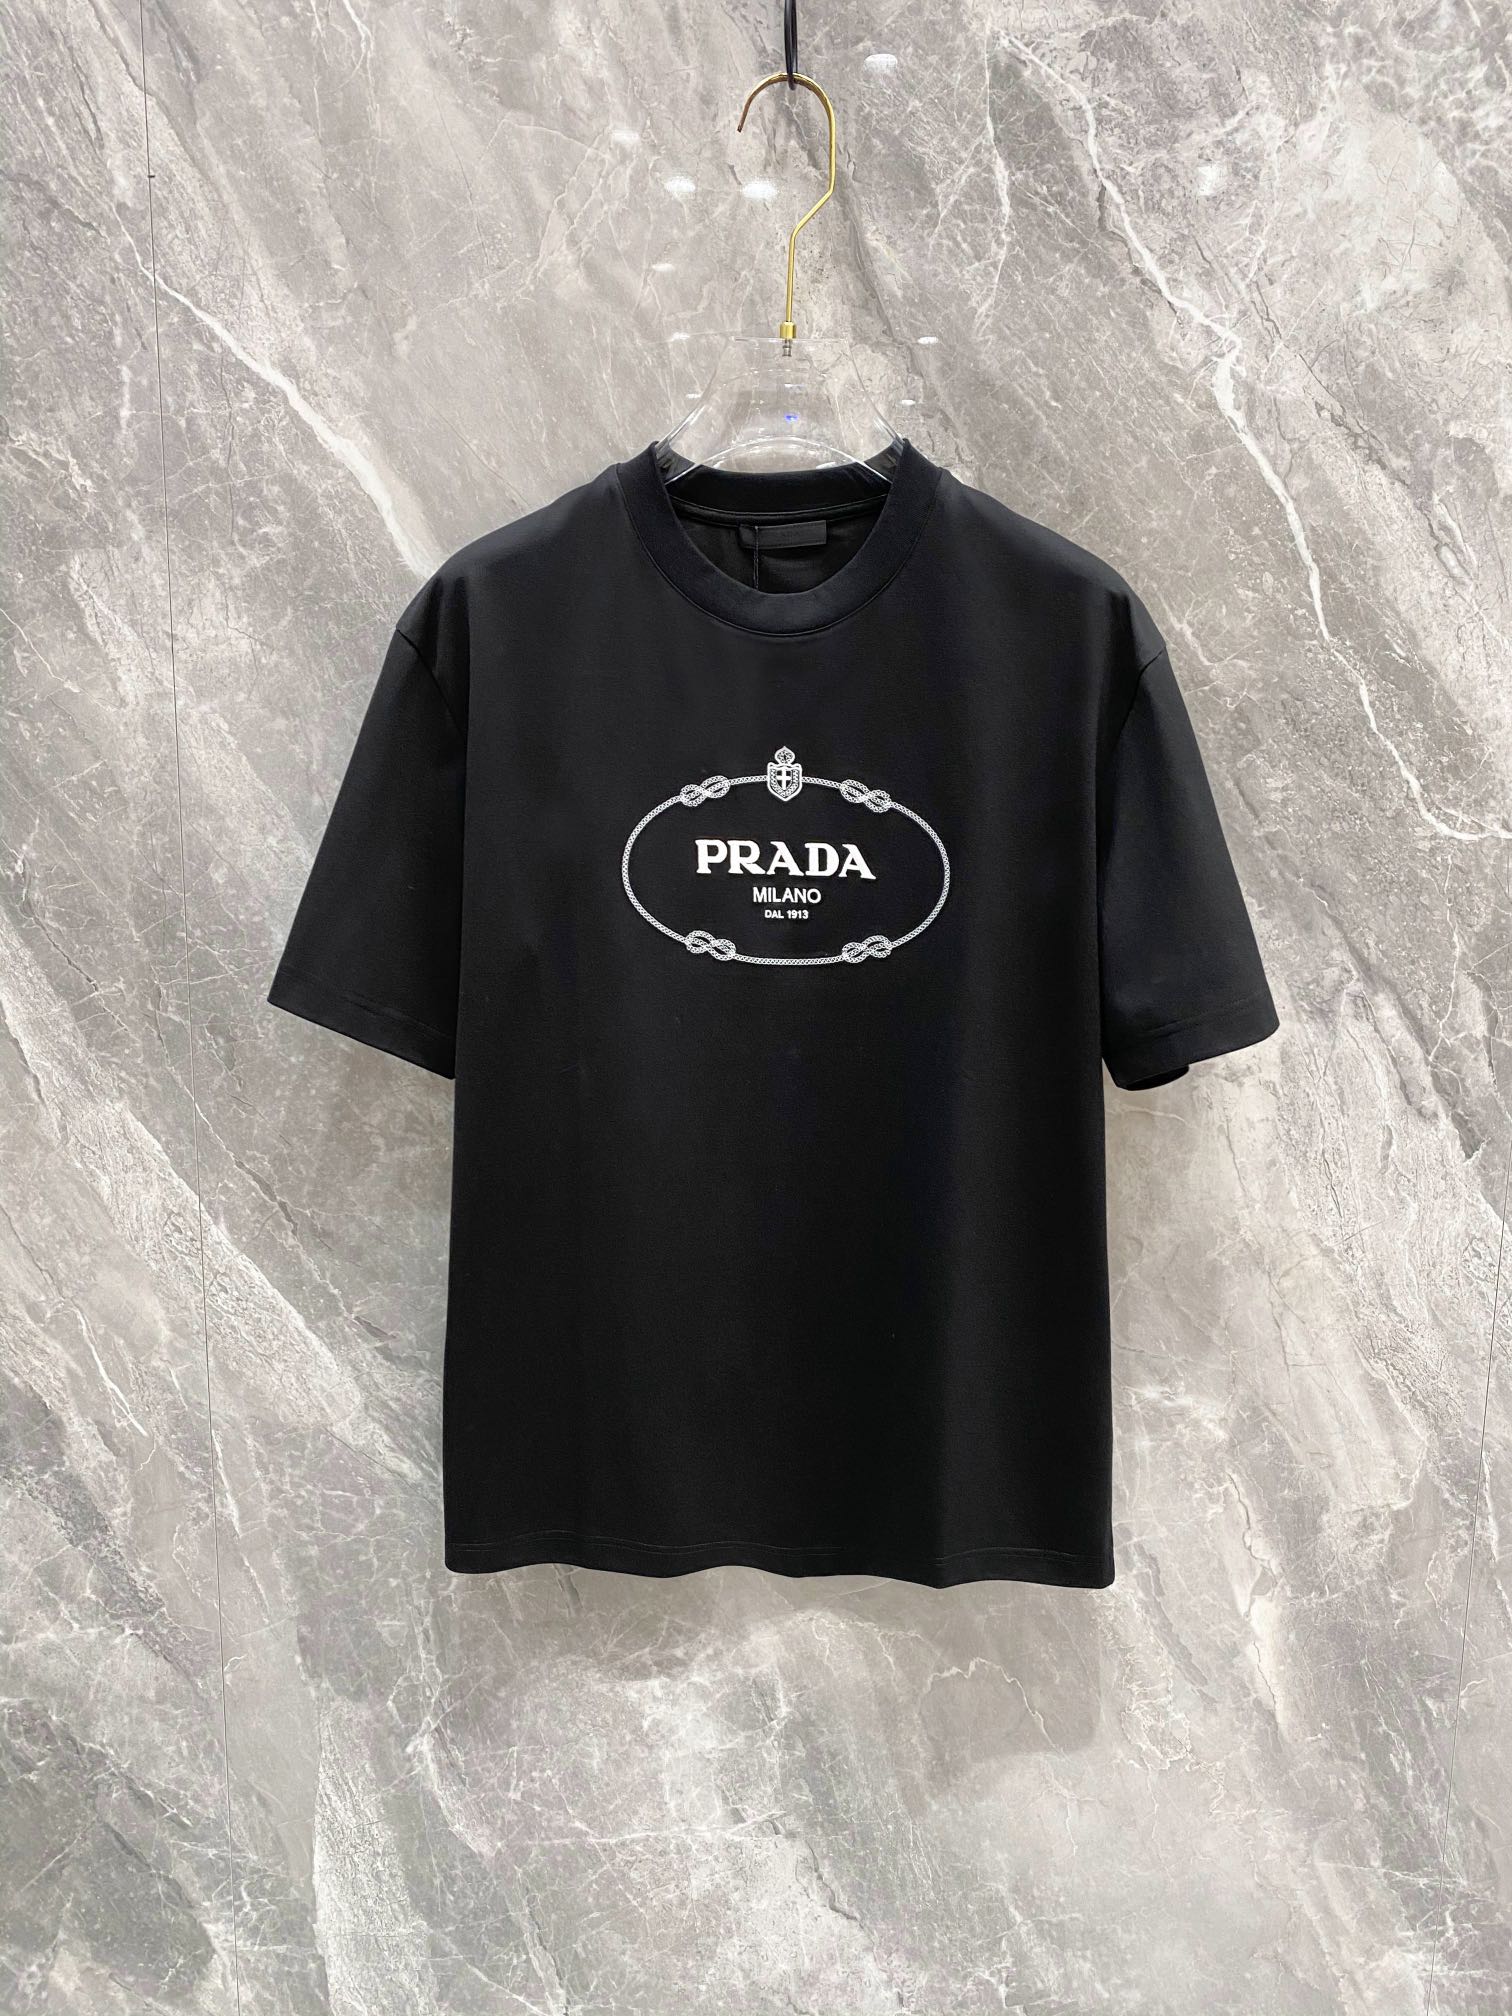 Prada Clothing T-Shirt Best knockoff
 Black White Cotton Spring/Summer Collection Fashion Short Sleeve